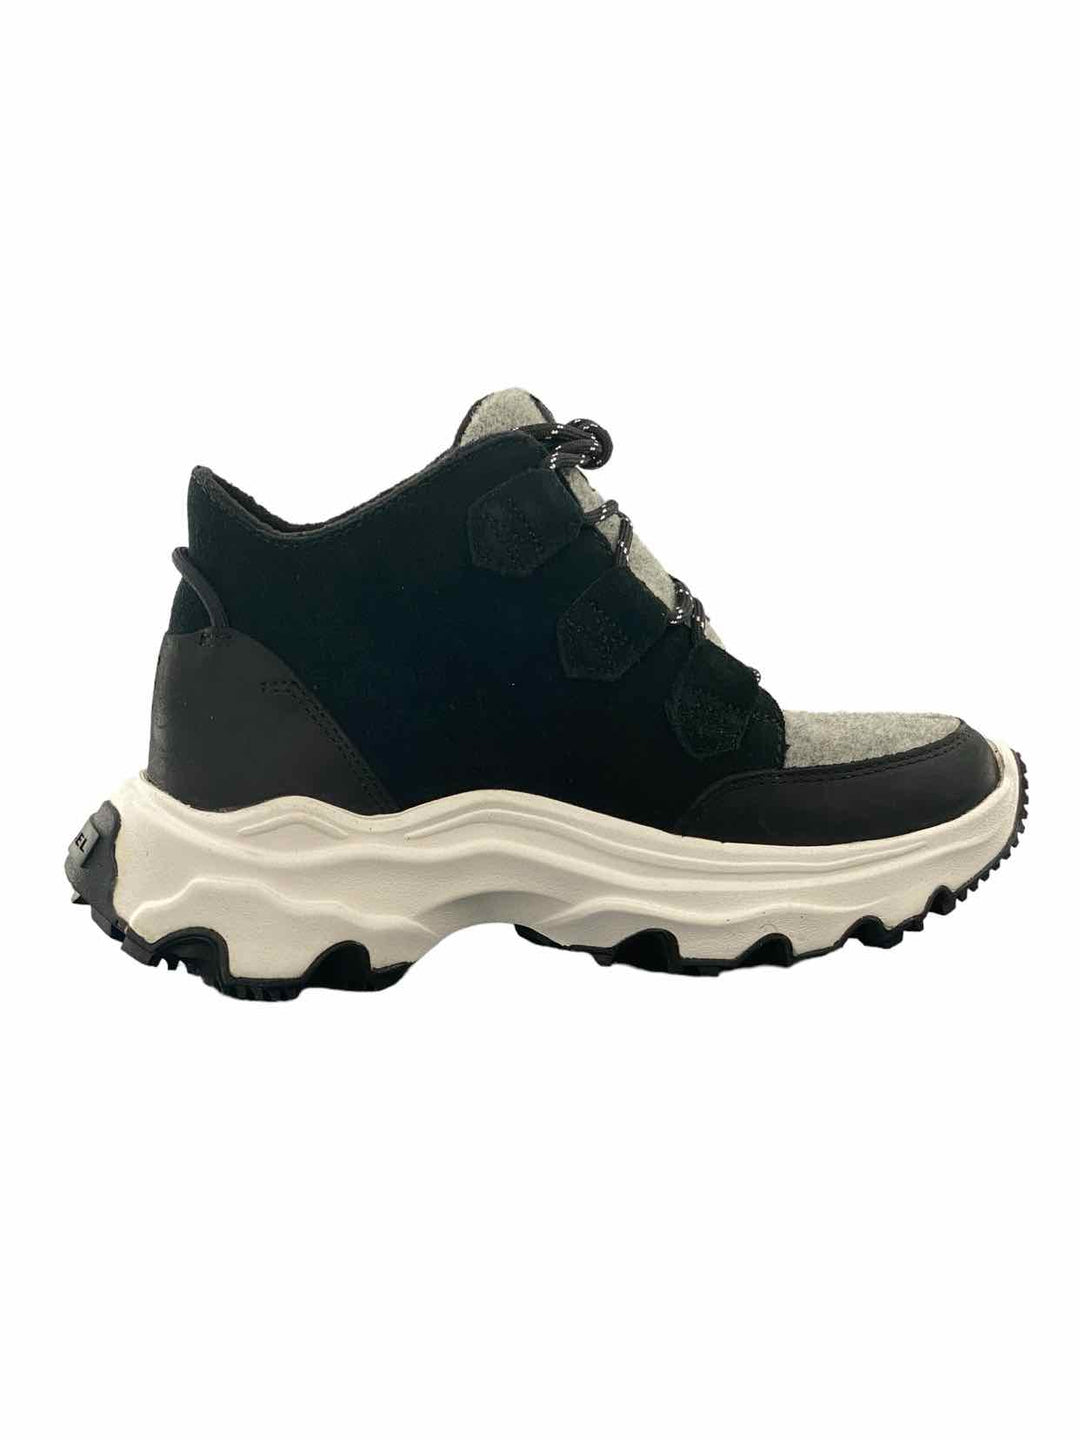 Sorel Shoe Size 7.5 Black NWOT Boots(Ankle)